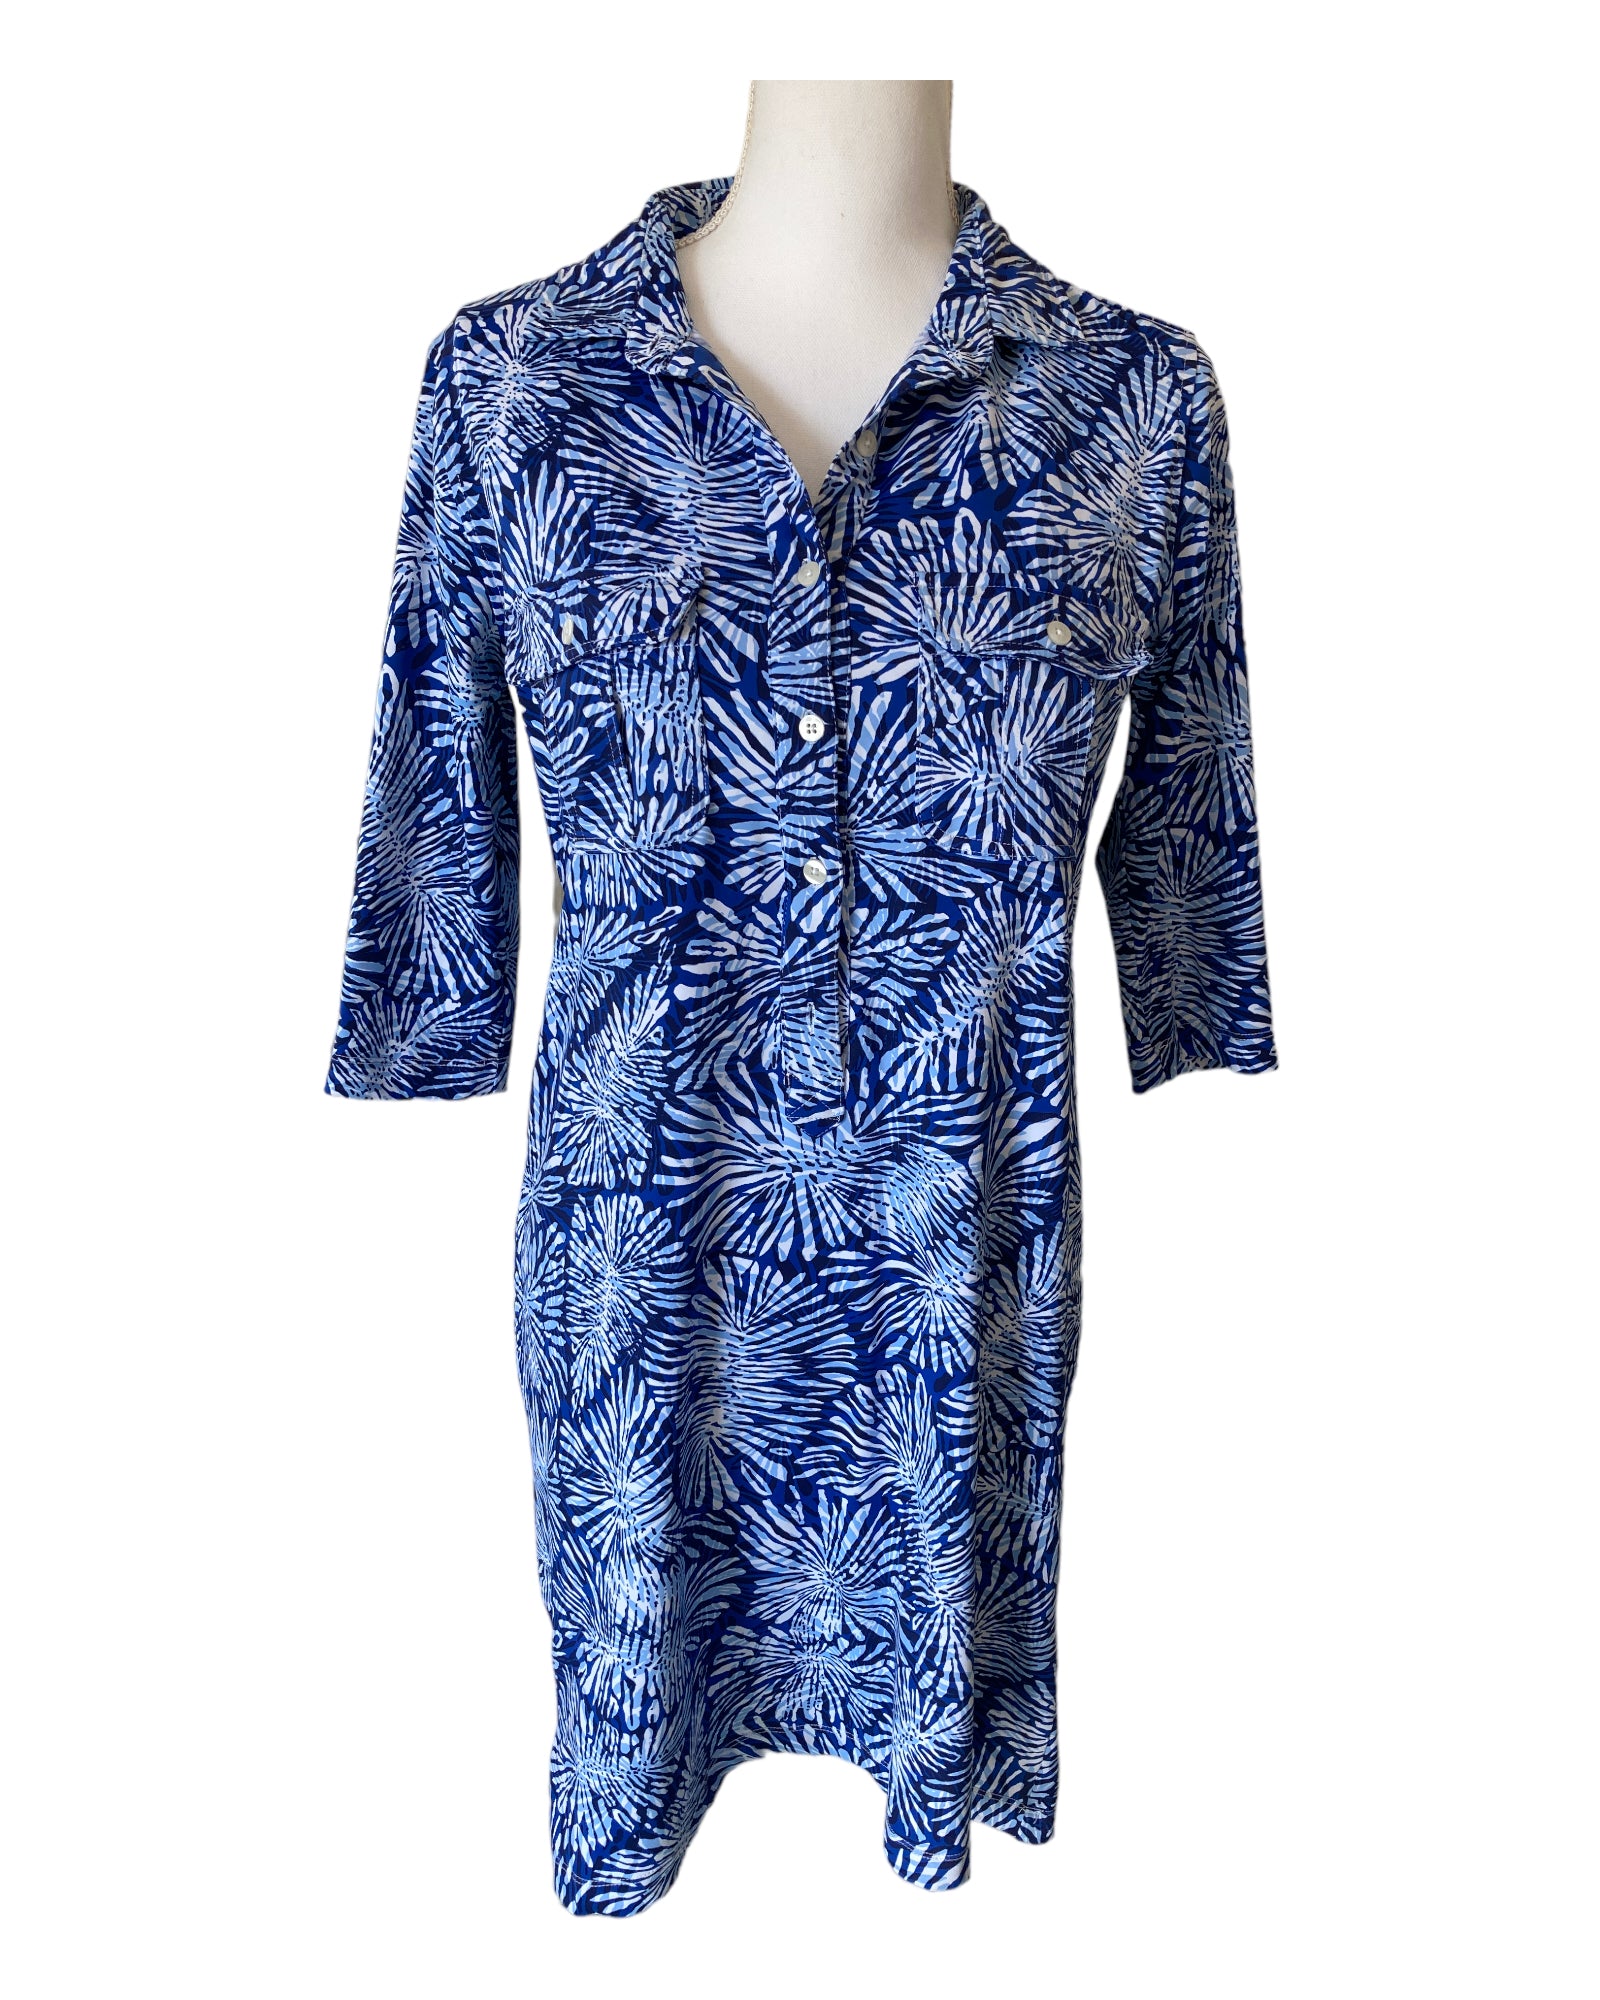 Persifor Blue Print Winpenny Dress, S